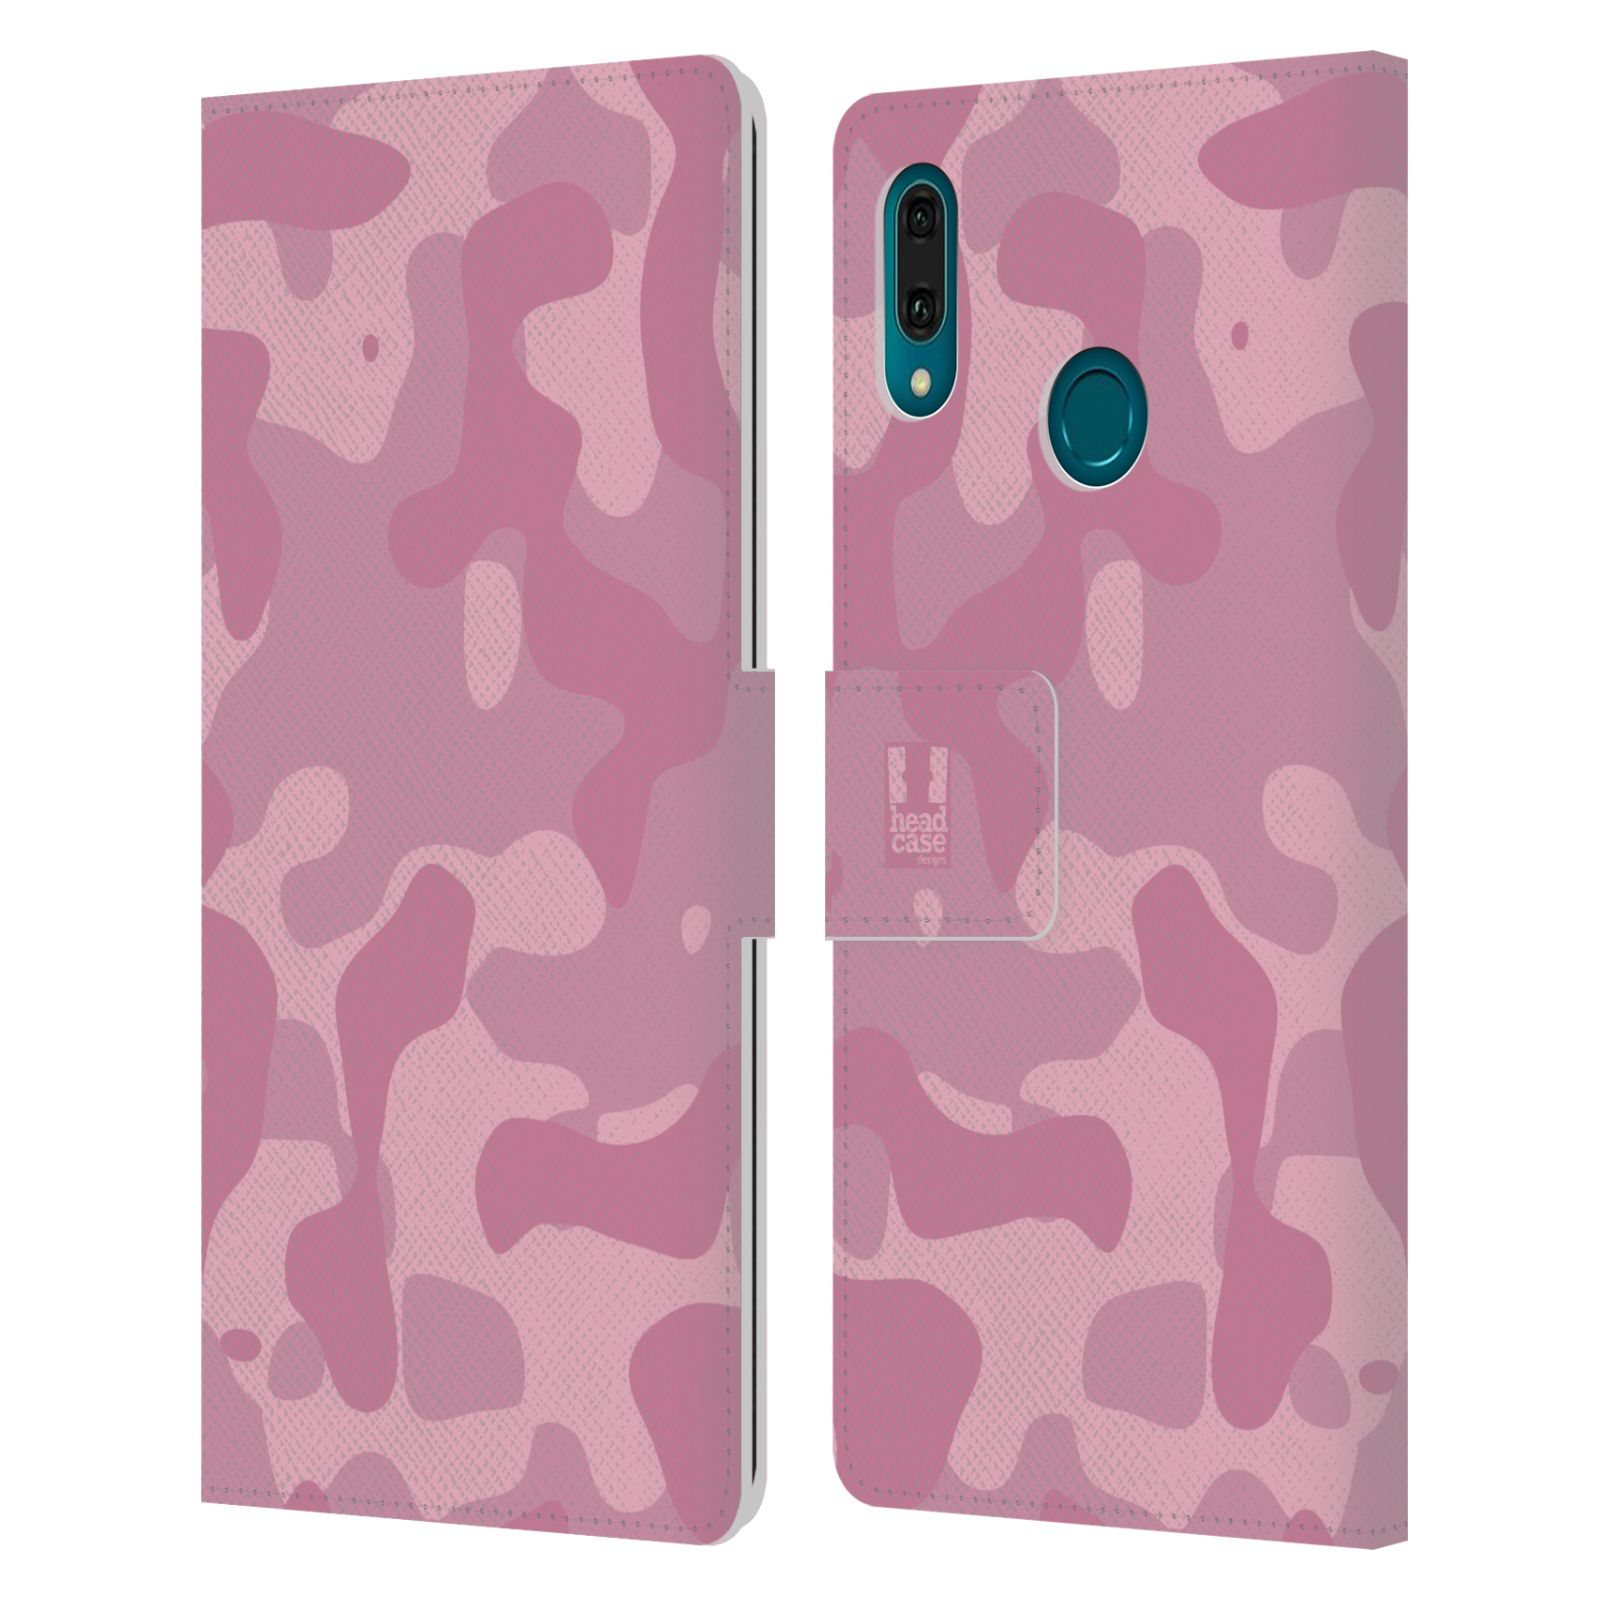 Pouzdro na mobil Huawei Y9 2019 lehká barevná kamufláž růžová